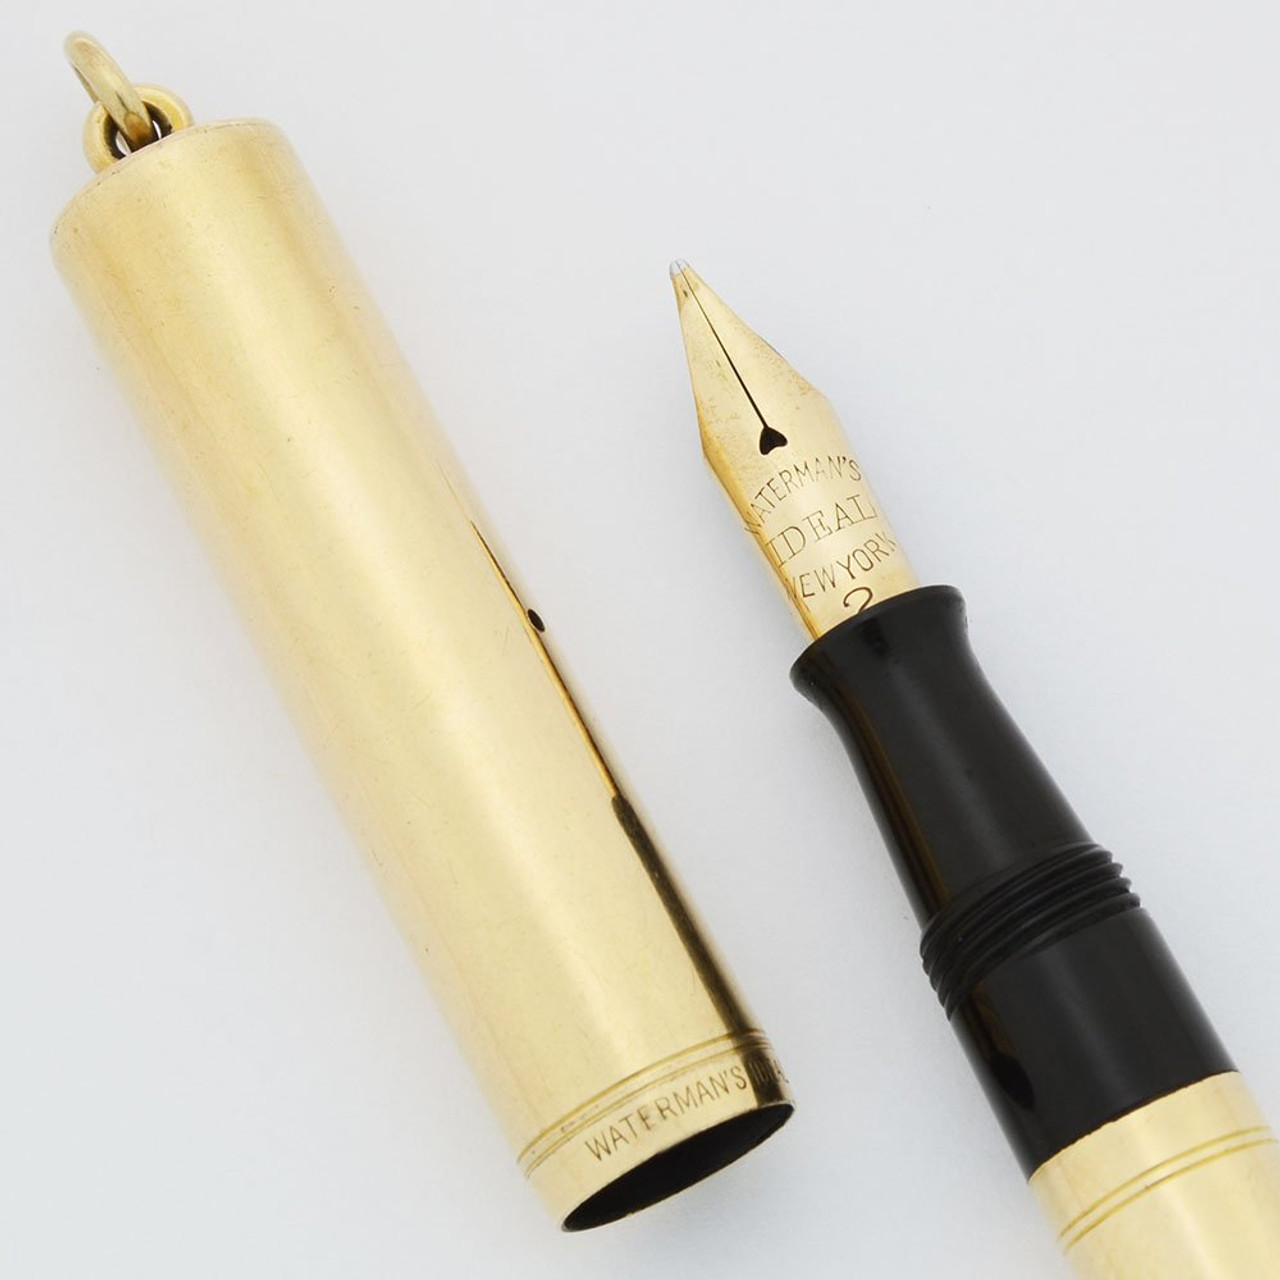 High Quality Metallic Paint Pen Gold Slim Nib – Economy of Brighton